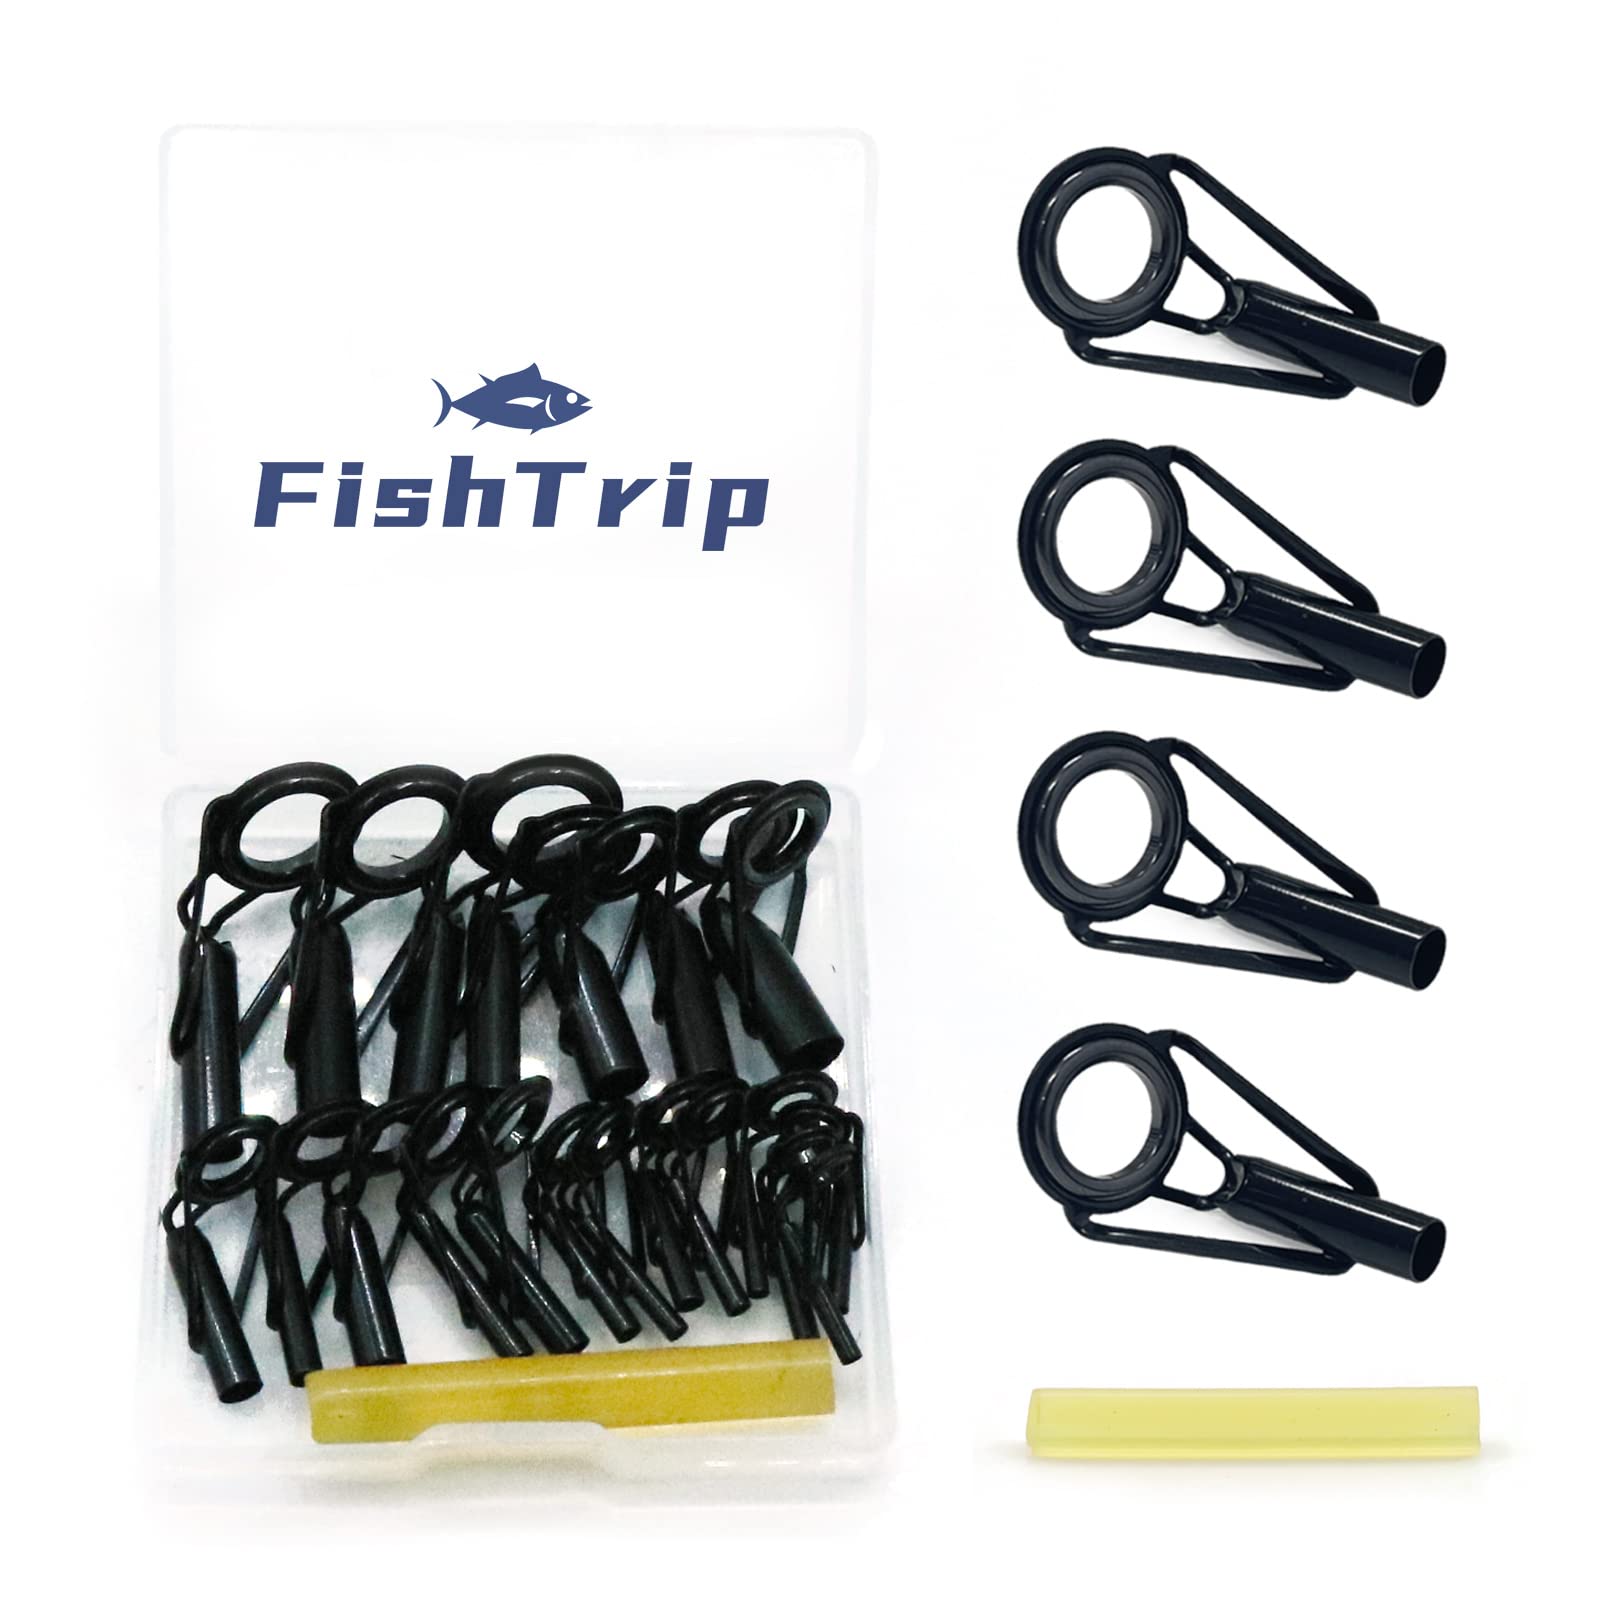 THKFISH Fishing Rod Tip Repair Kit Rod Repair Kit Small Freshwater  Stainless